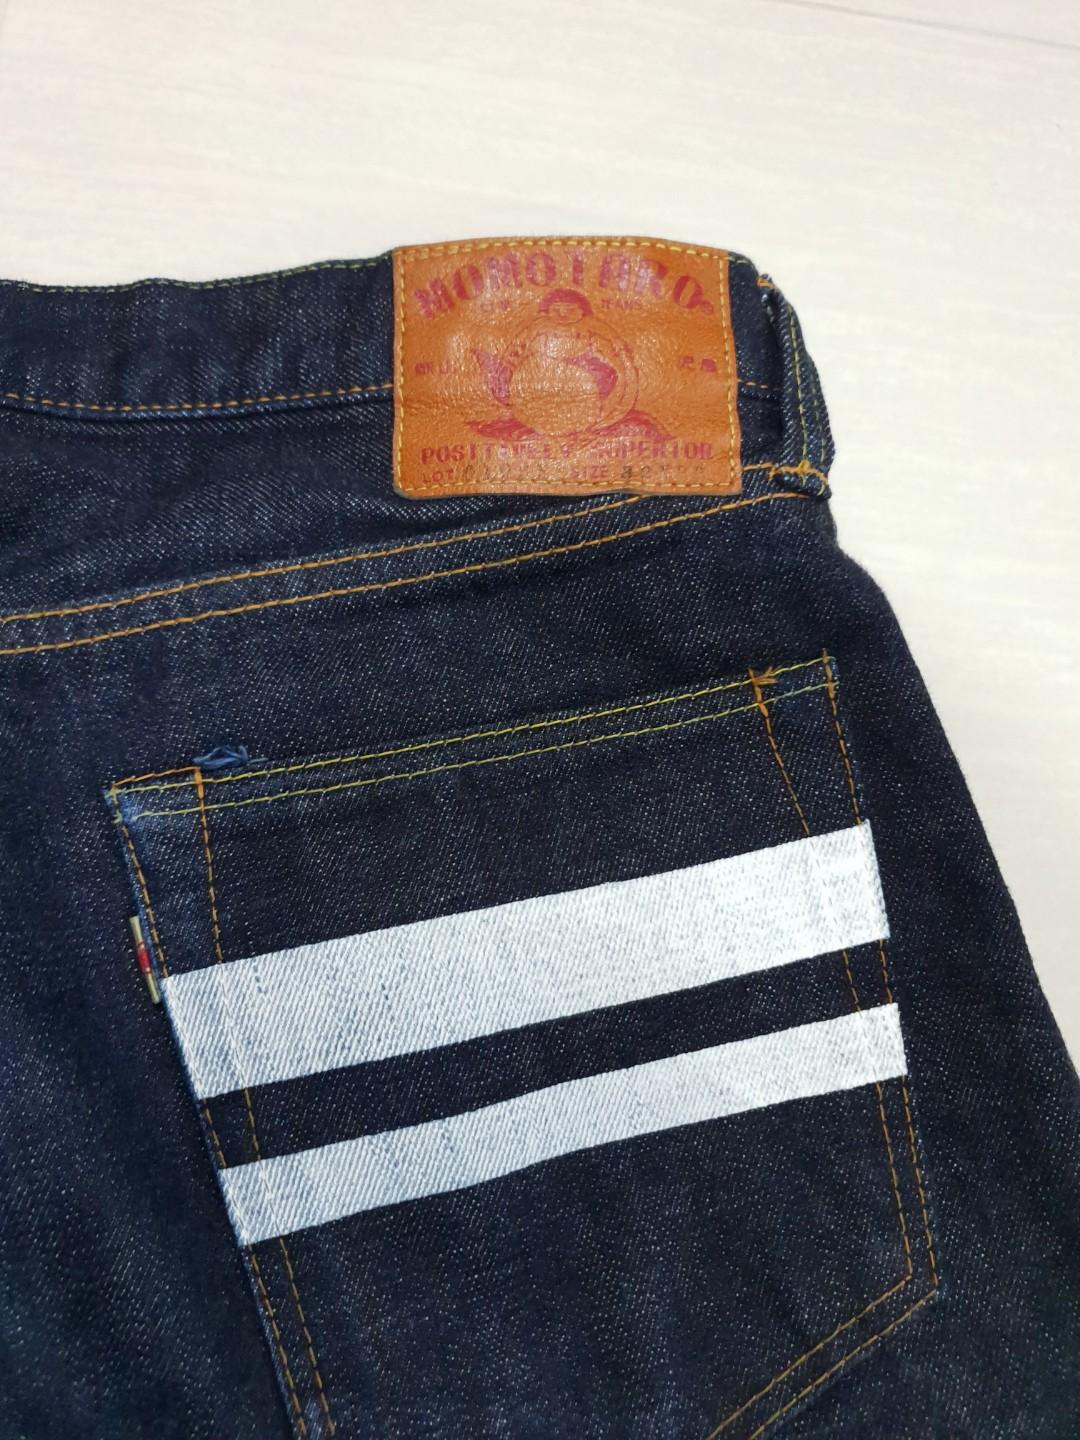 momotaro jeans price